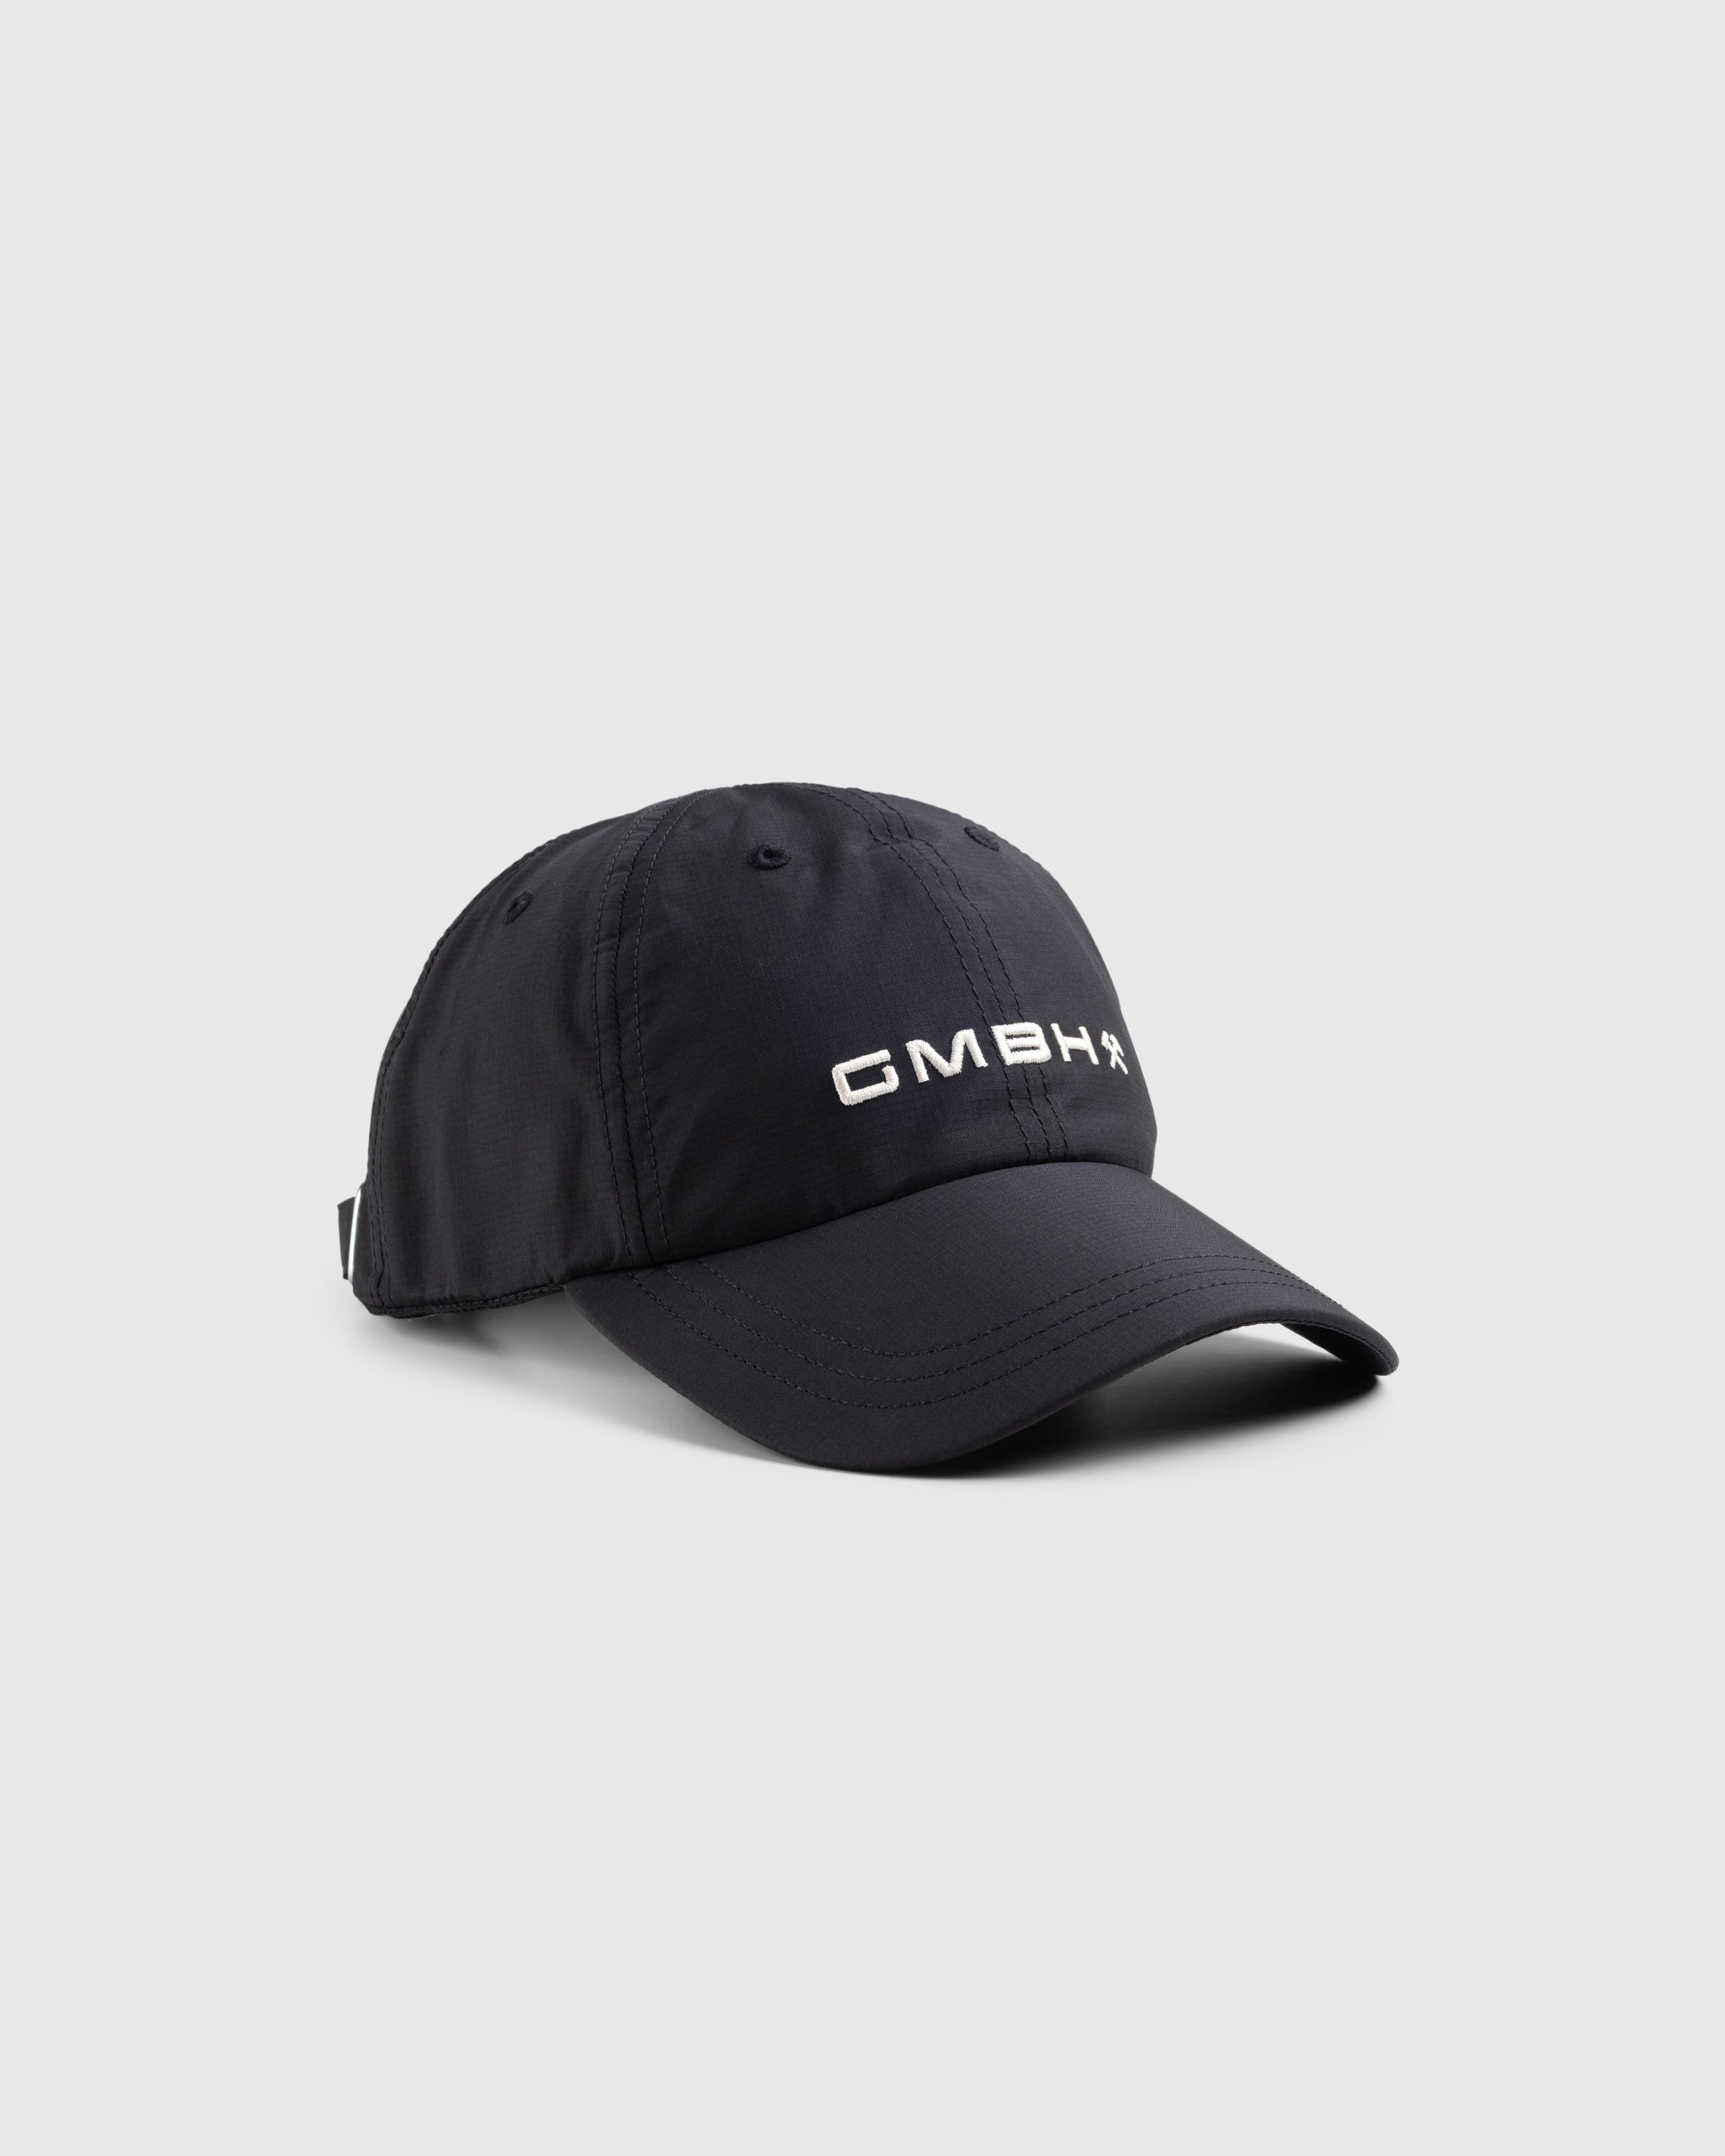 GmbH – Logo Embroidered Baseball Cap Black - Hats - Black - Image 1